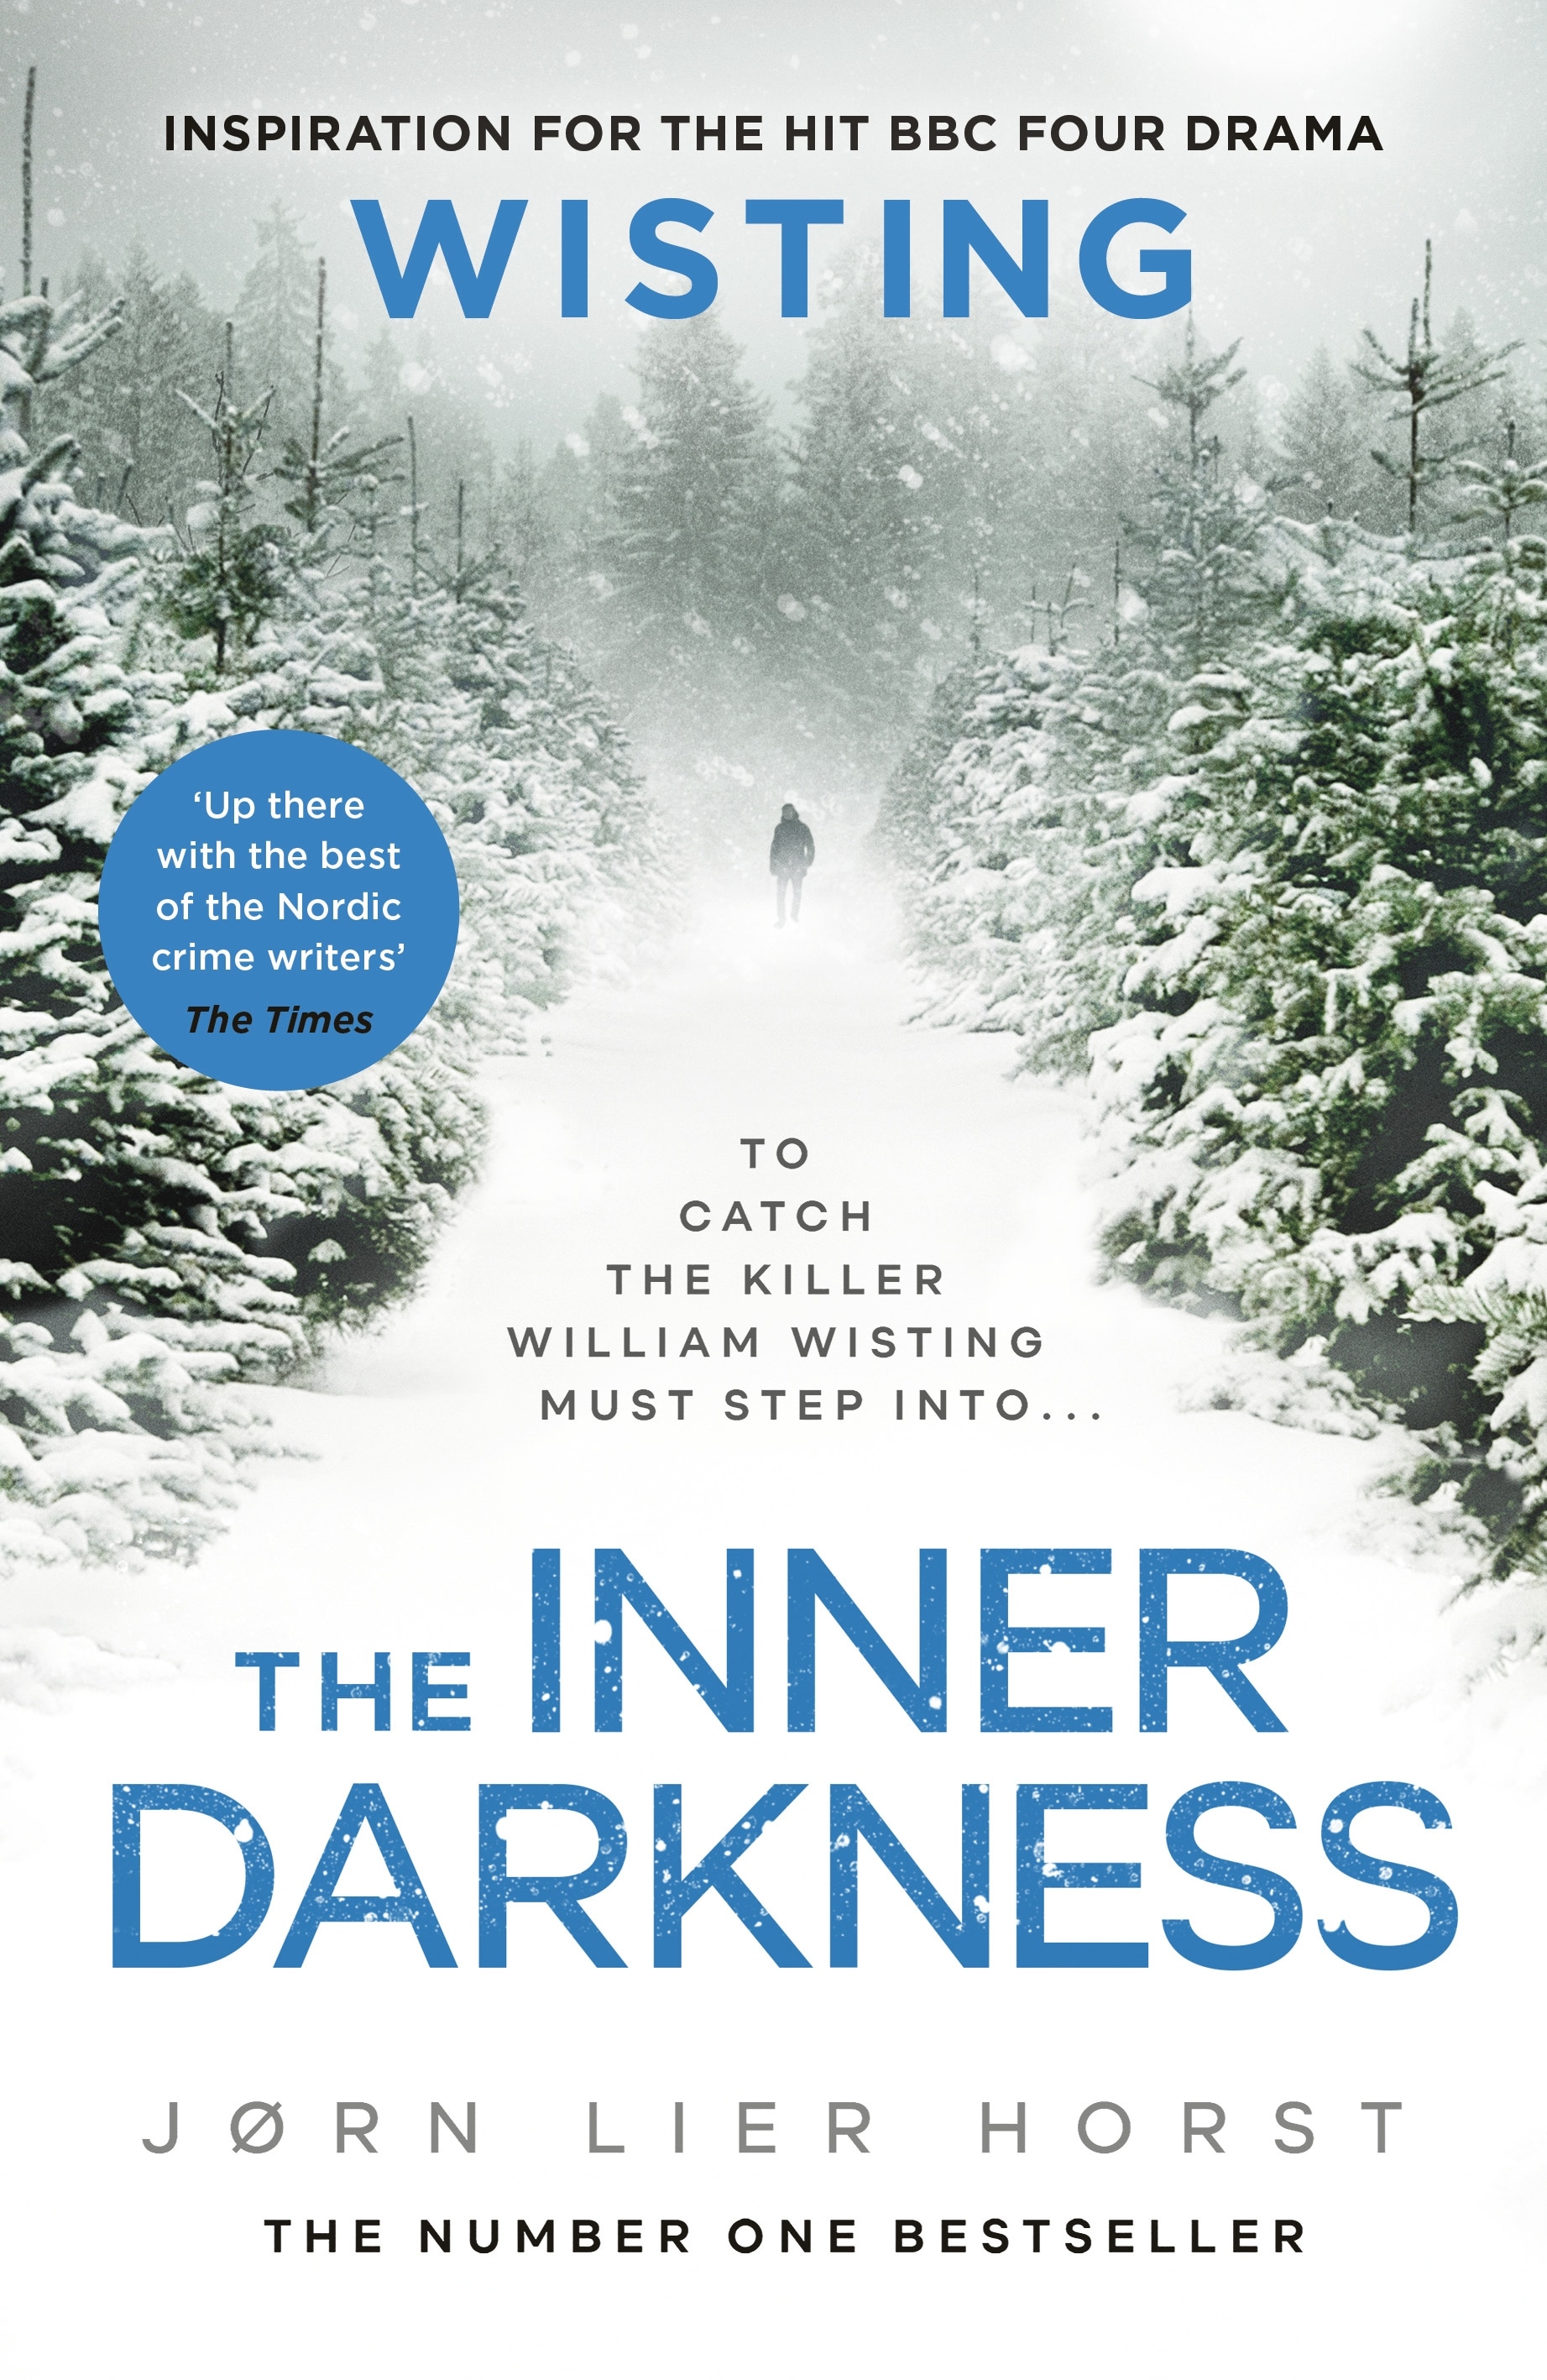 Book “The Inner Darkness” by Jørn Lier Horst — November 26, 2020